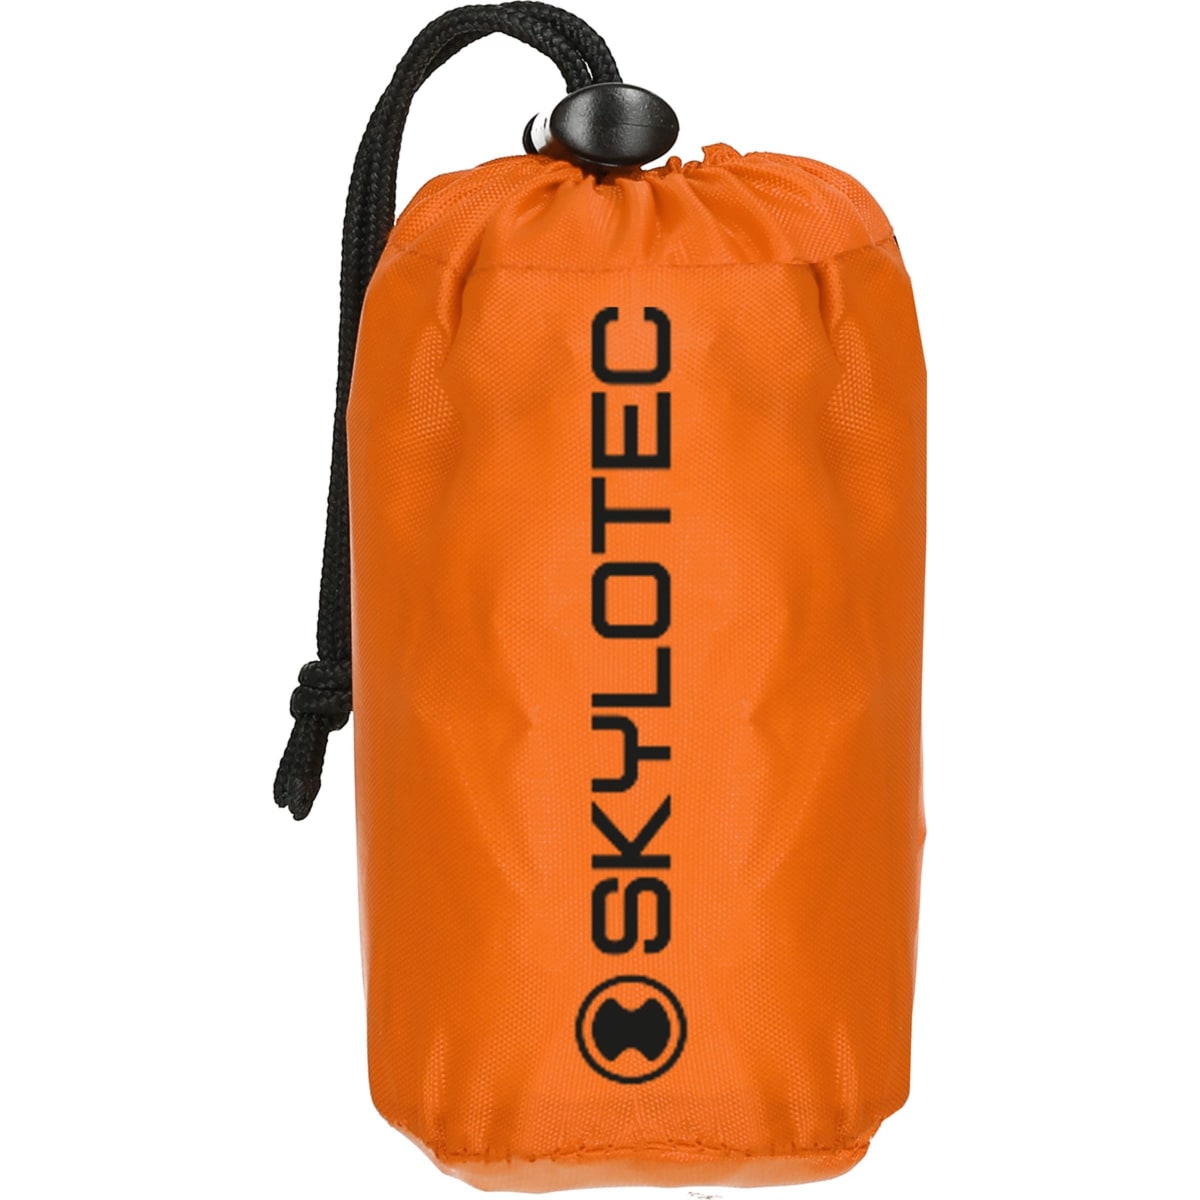 Skylotec Bivi Light Bag